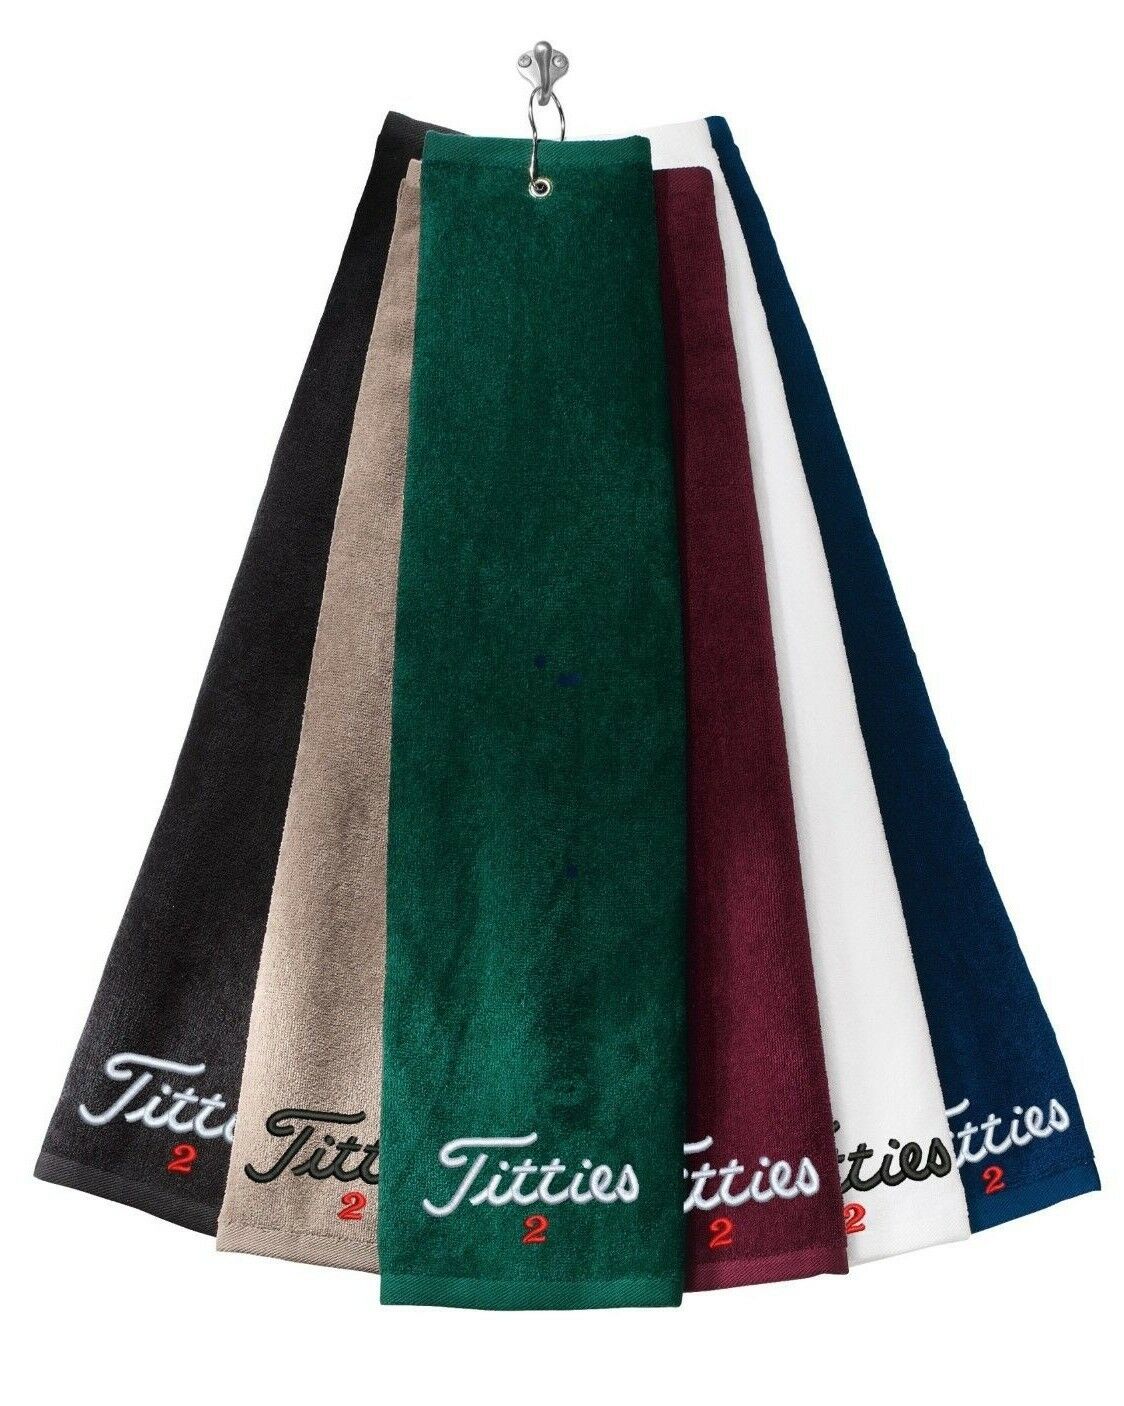 Titties 2 -golf-pga-bachelor- - Grommeted Tri-fold Golf Towel